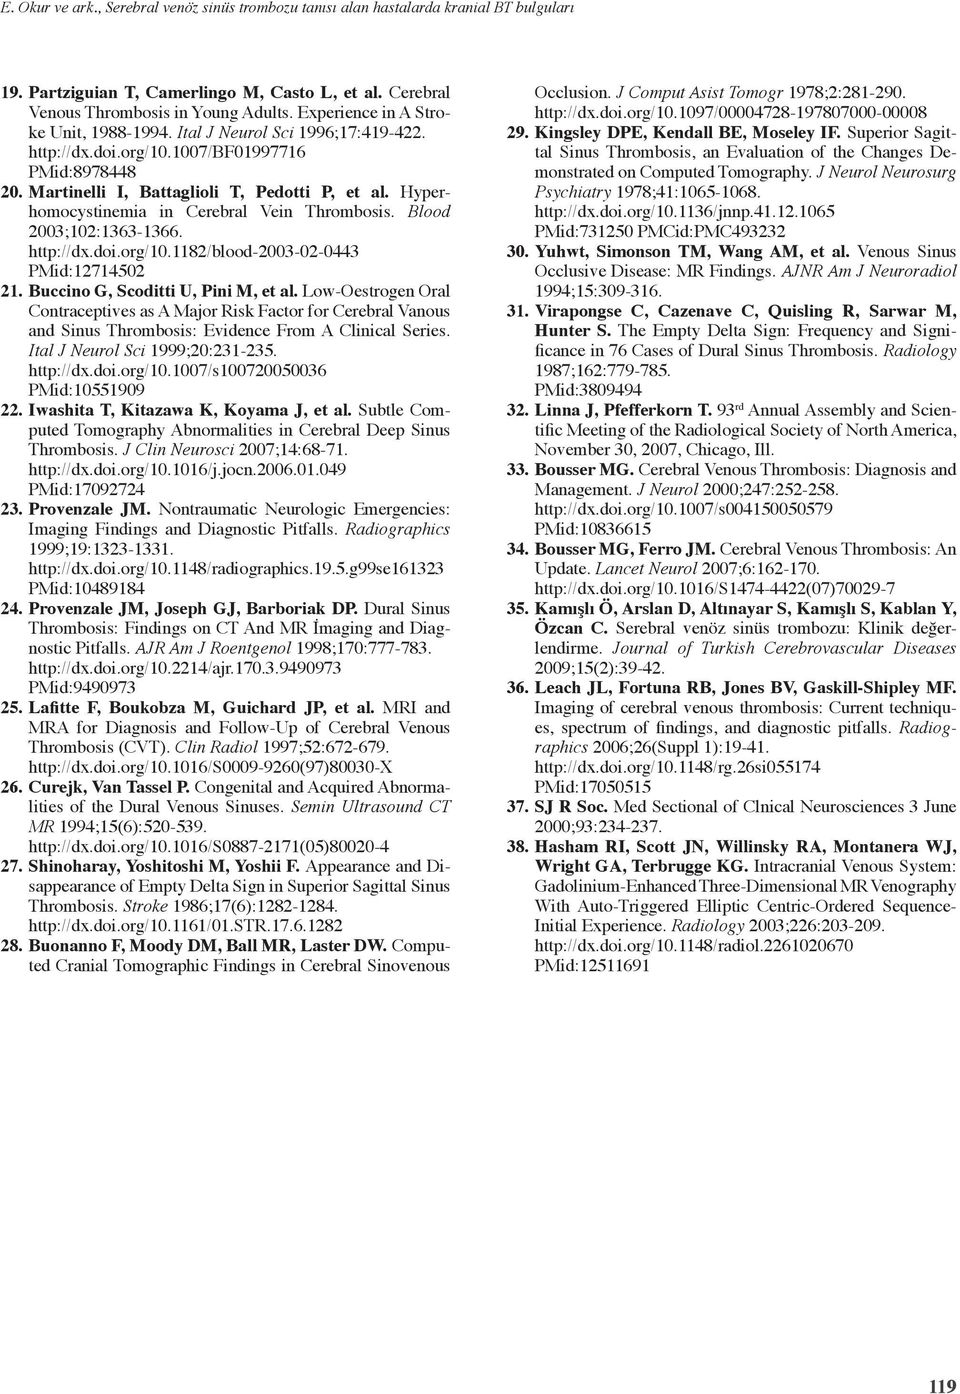 Hyperhomocystinemia in Cerebral Vein Thrombosis. Blood 003;10:1363-1366. http://d.doi.org/10.118/blood-003-0-0443 PMid:171450 1. Buccino G, Scoditti U, Pini M, et al.